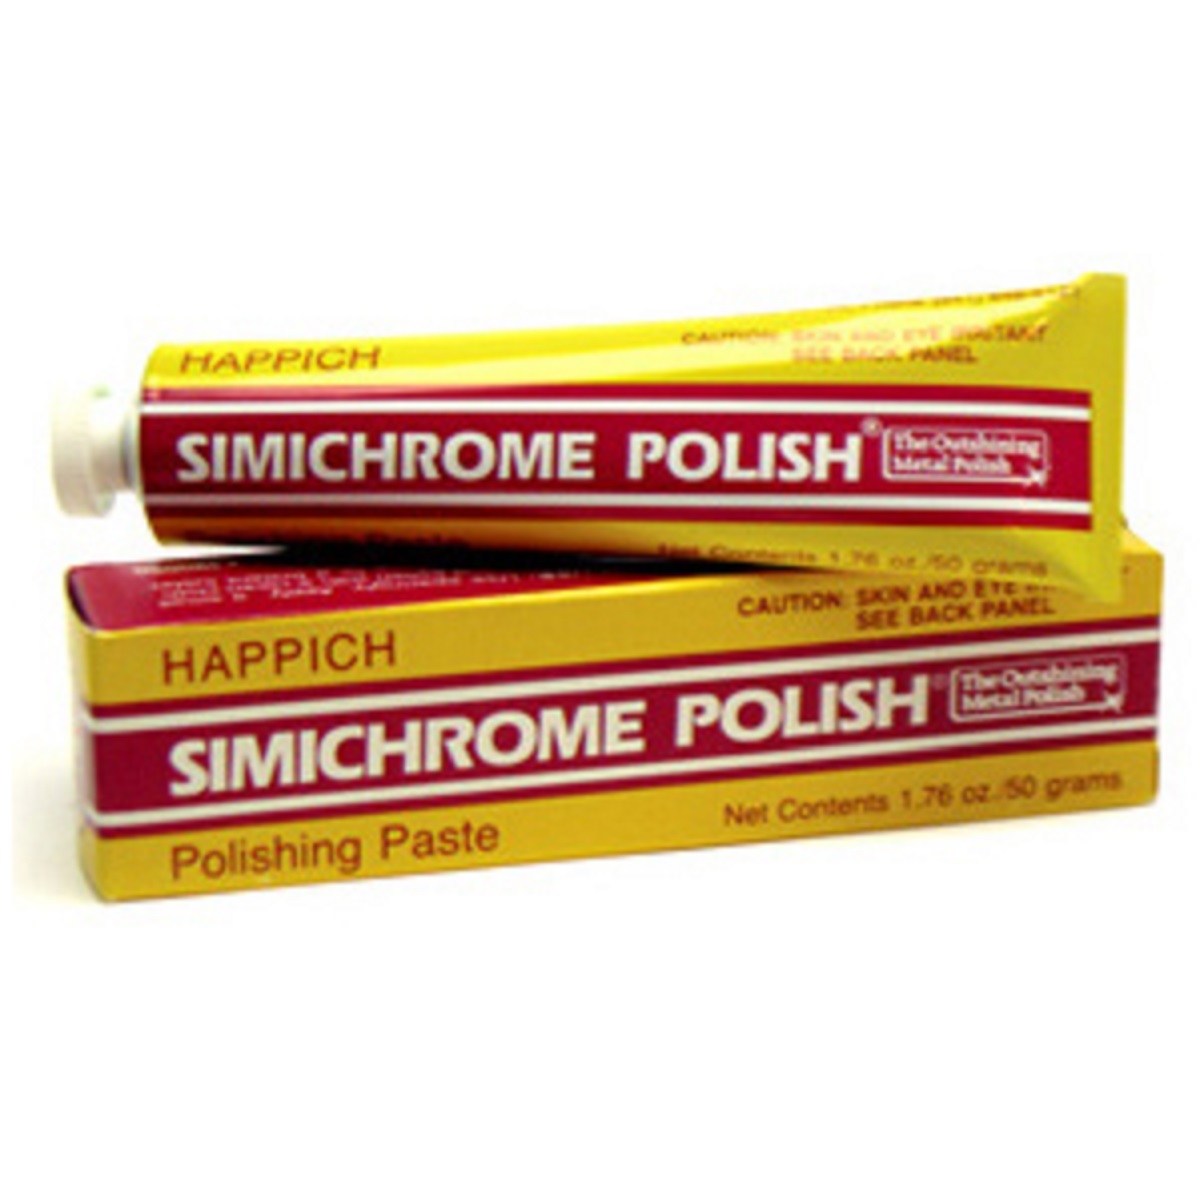 6 Pack Simichrome Polish 1.76 oz Happich Metal Polishing Paste 390050  Bakelite Test